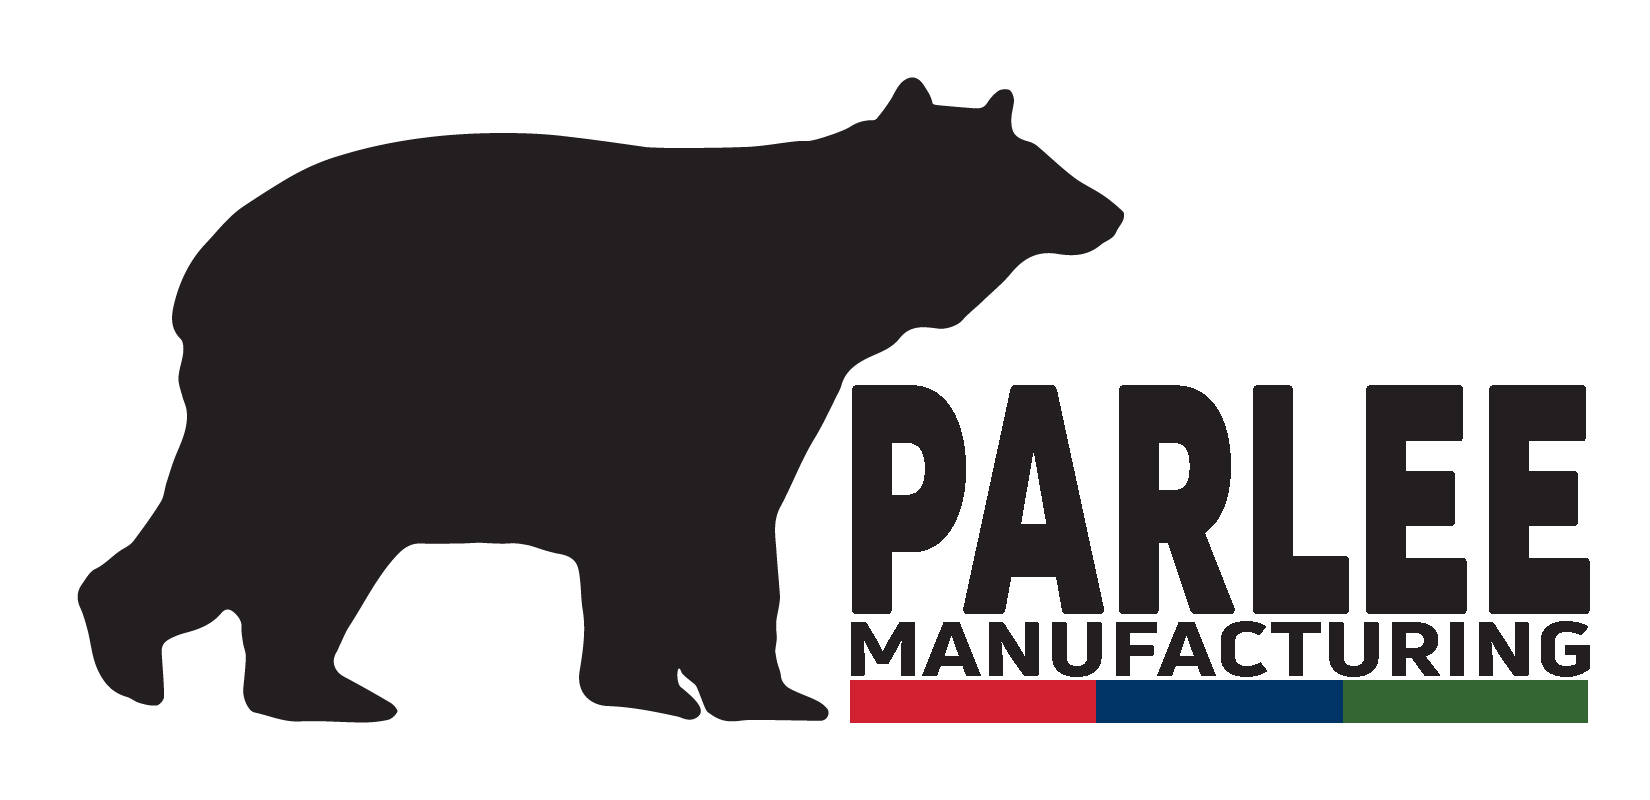 Parlee Manufacturing Company Ltd. Logo